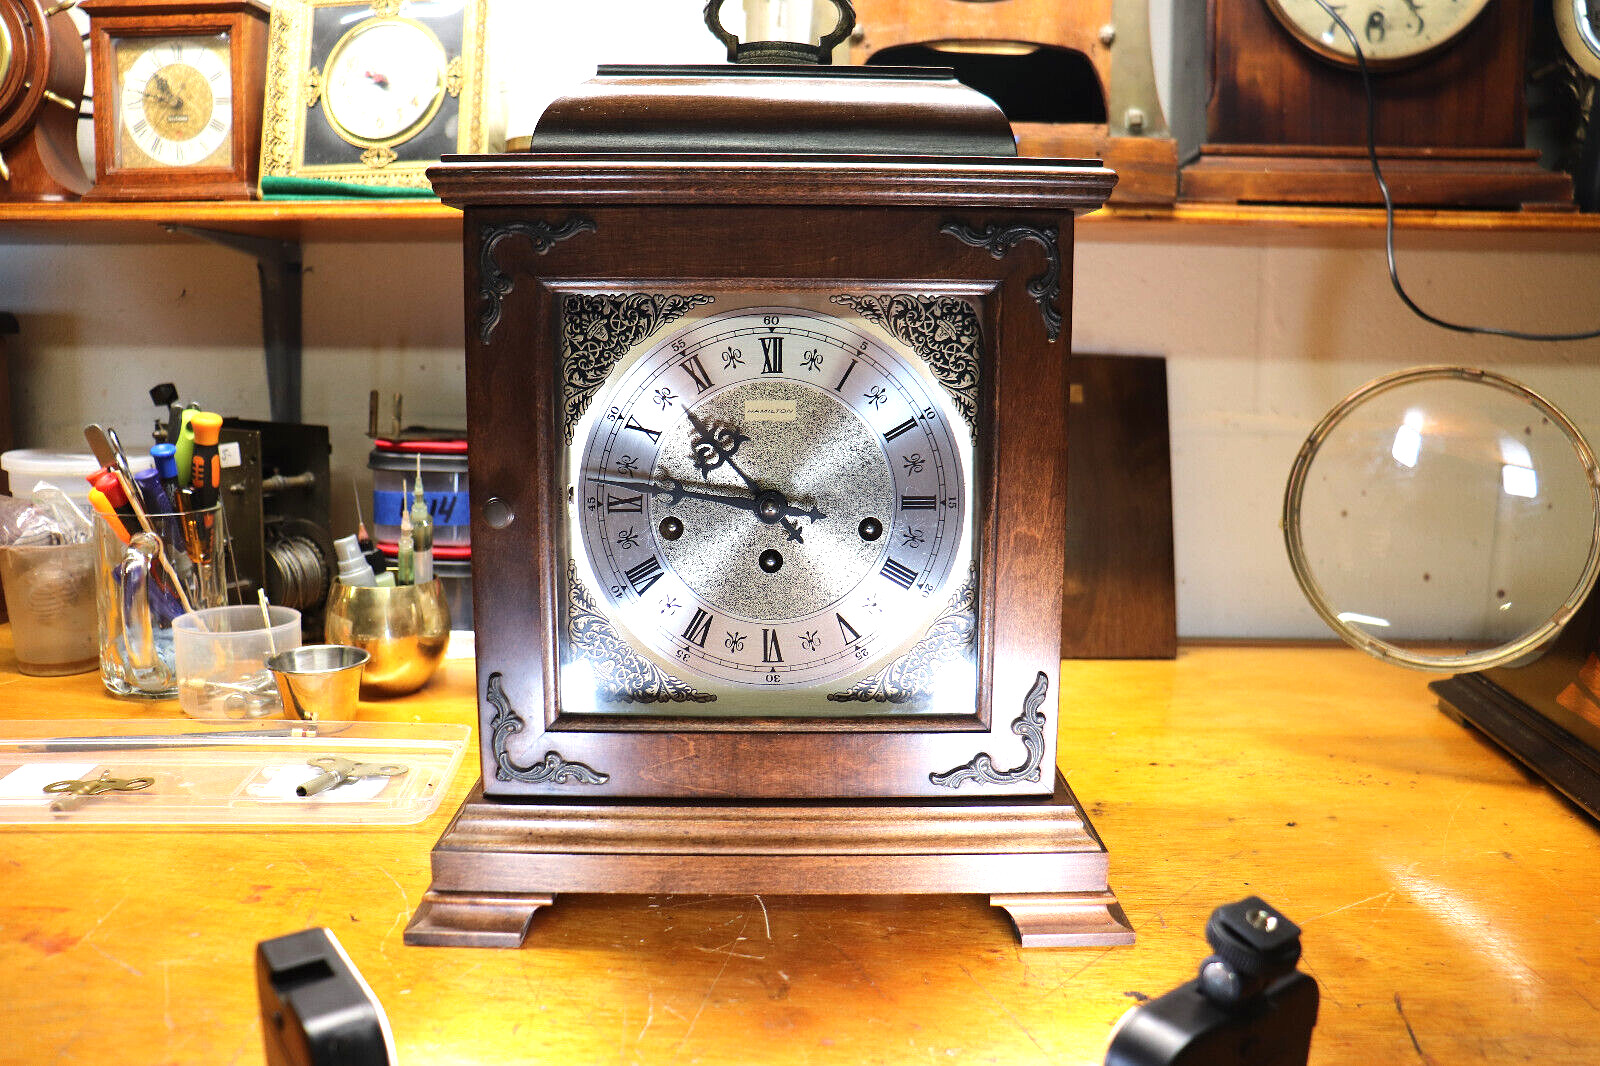 Hamilton Wheatland Chiming Mantel Clock- Excellent Used Condition - 1984 Vintage